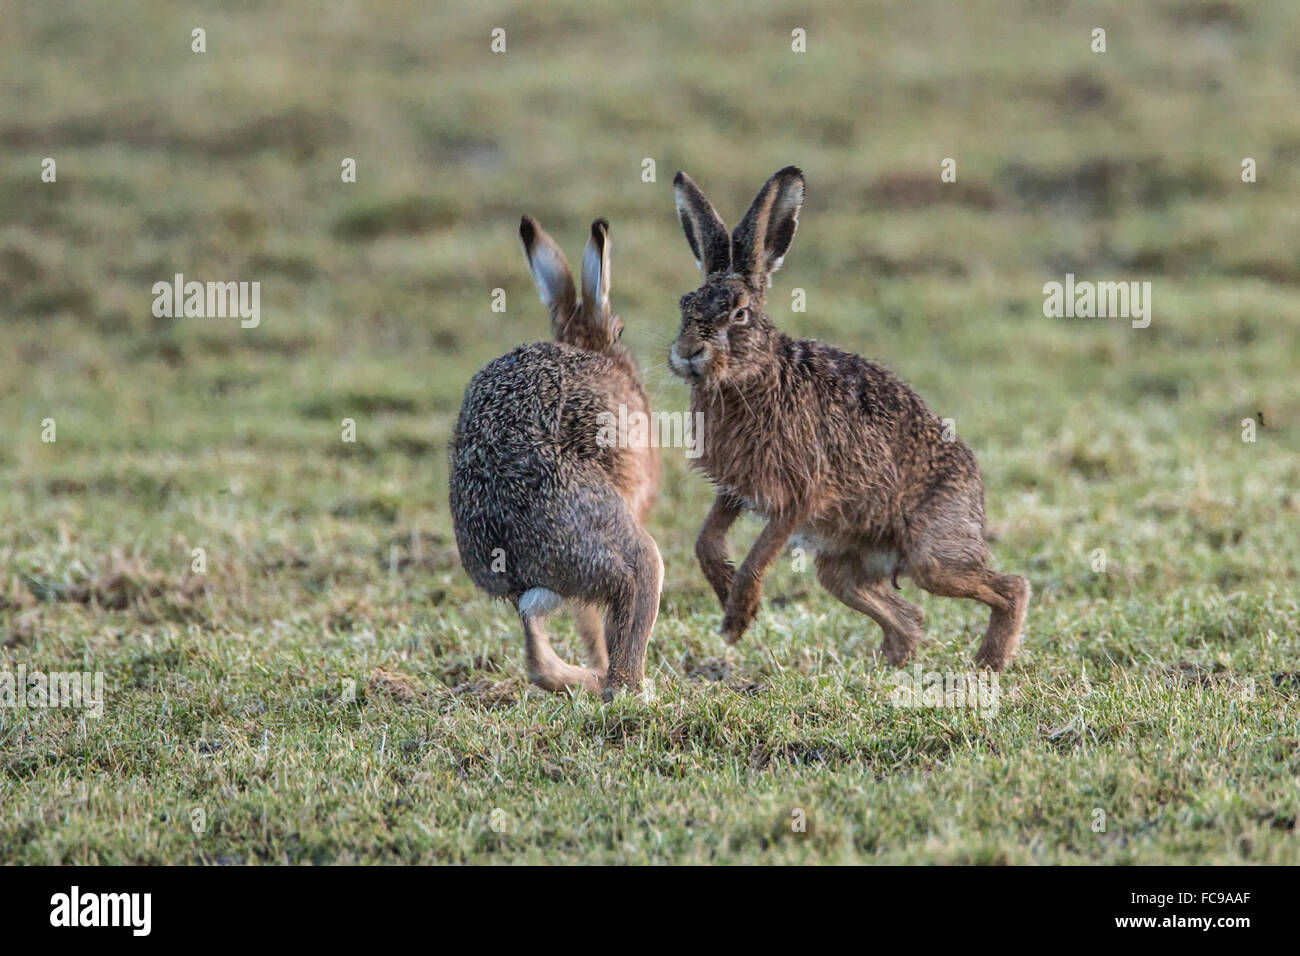 Netherlands, Nijkerk, Arkemheen Polder, Hares fighting during mating season Stock Photo